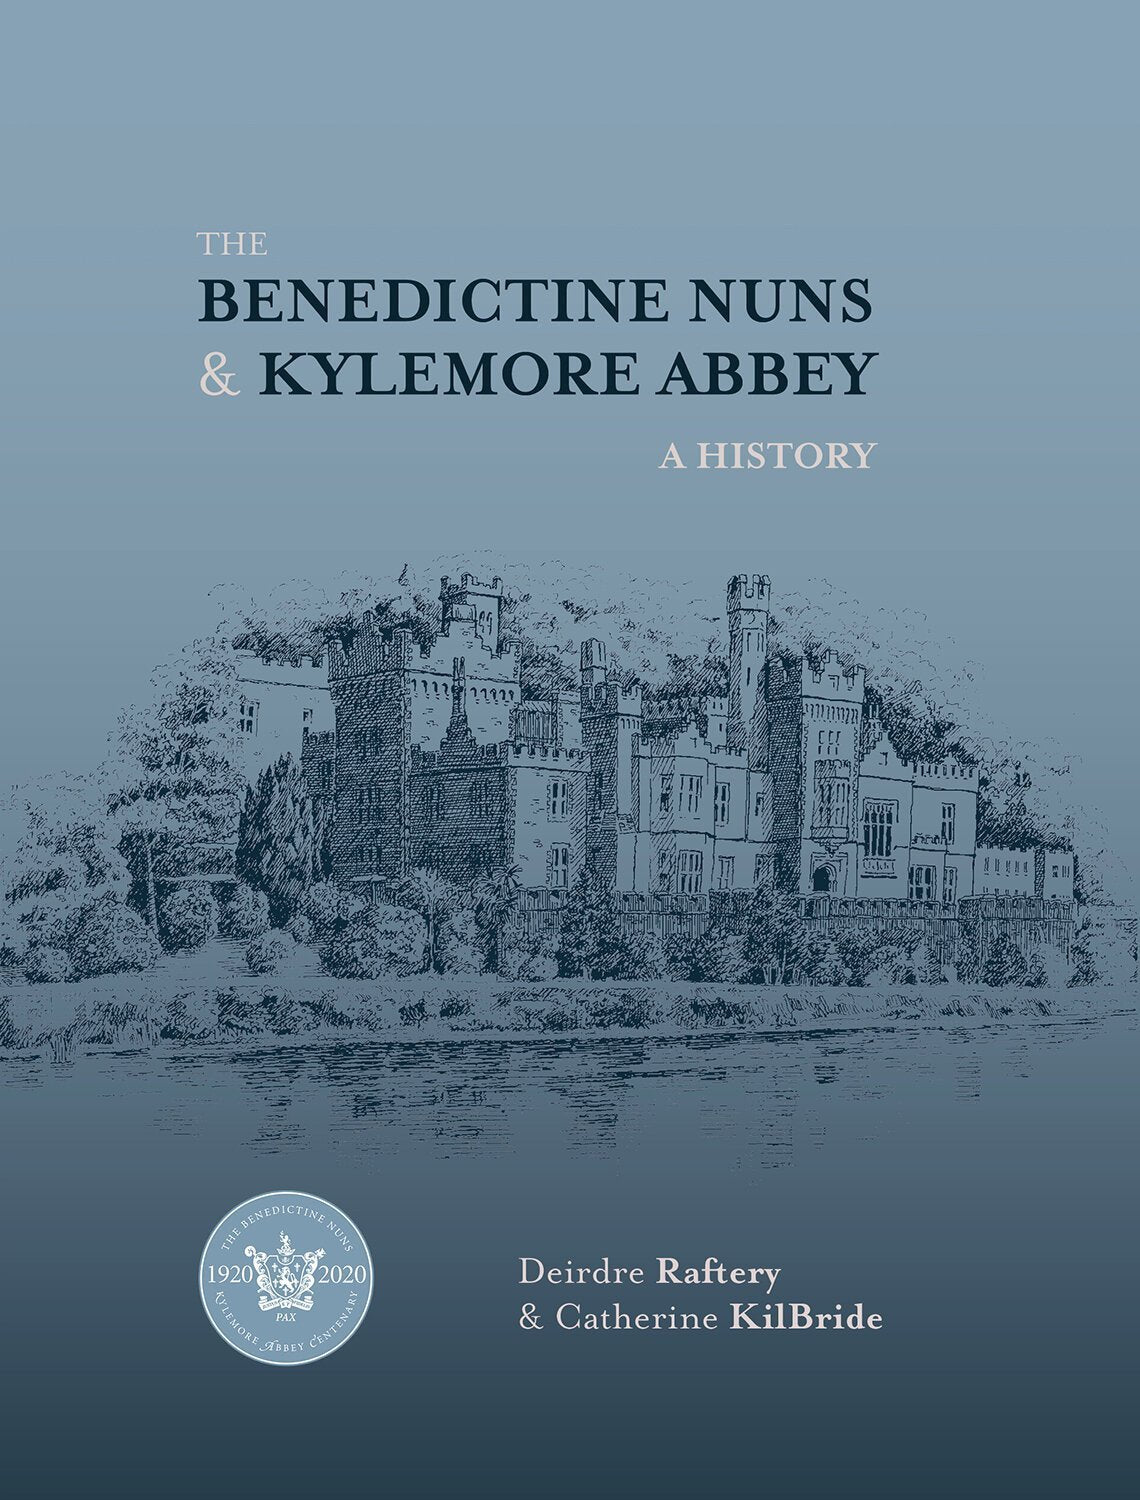 The Benedictine Nuns and Kylemore Abbey A History hardback book.